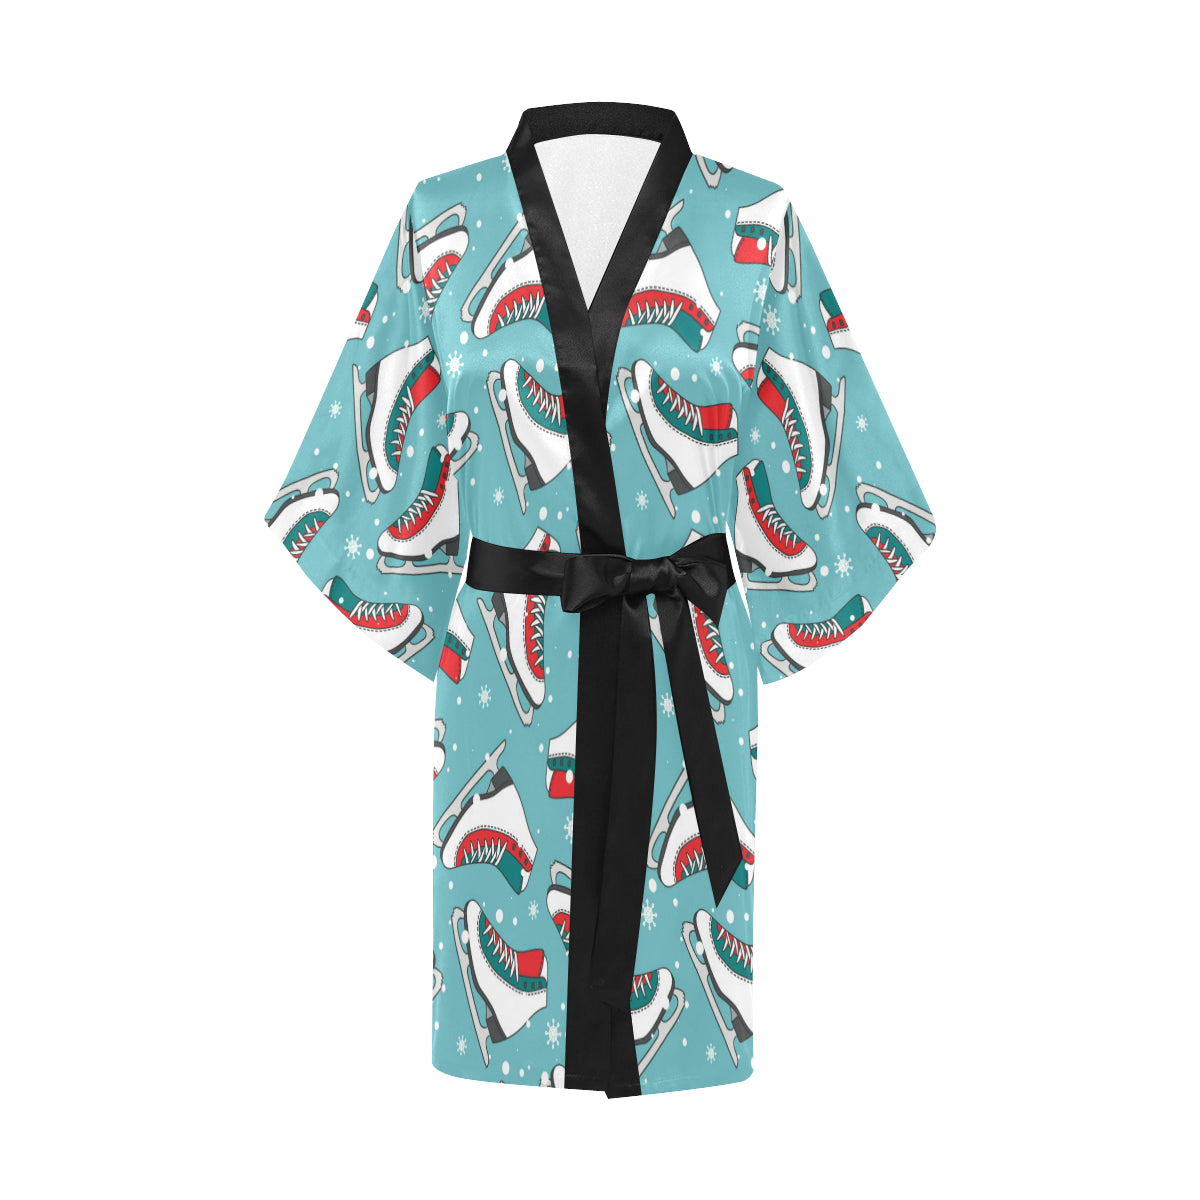 Ice Skate Pattern Print Design 03 Women's Short Kimono